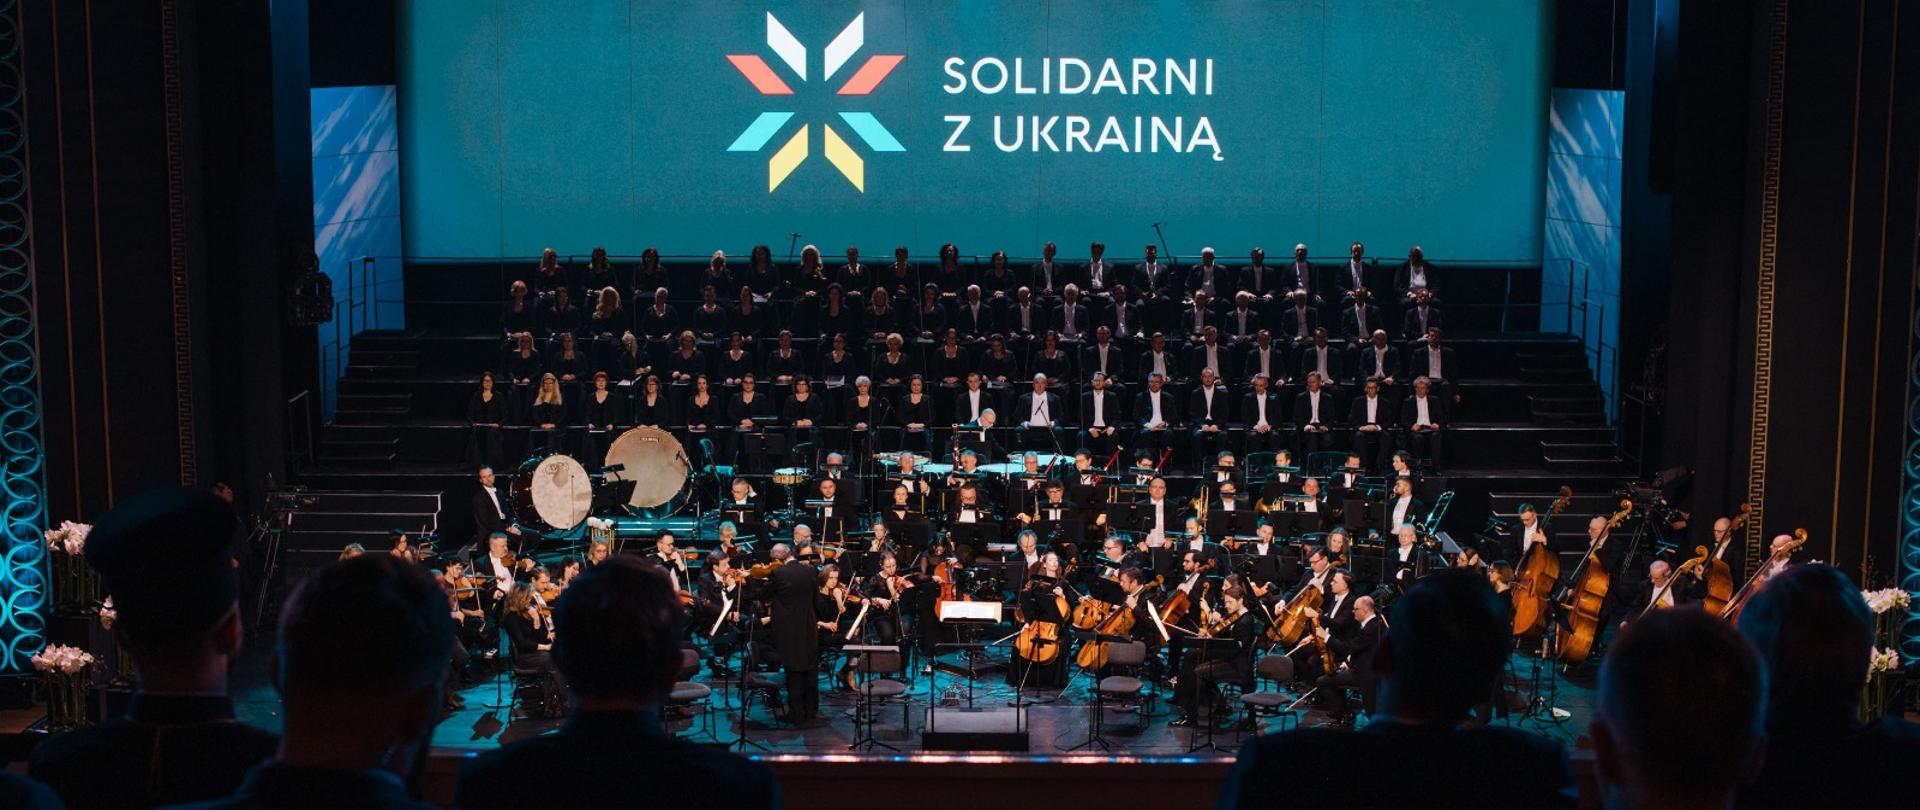 Koncert Solidarni z Ukrainą. Na widowni premier Mateusz Morawiecki.